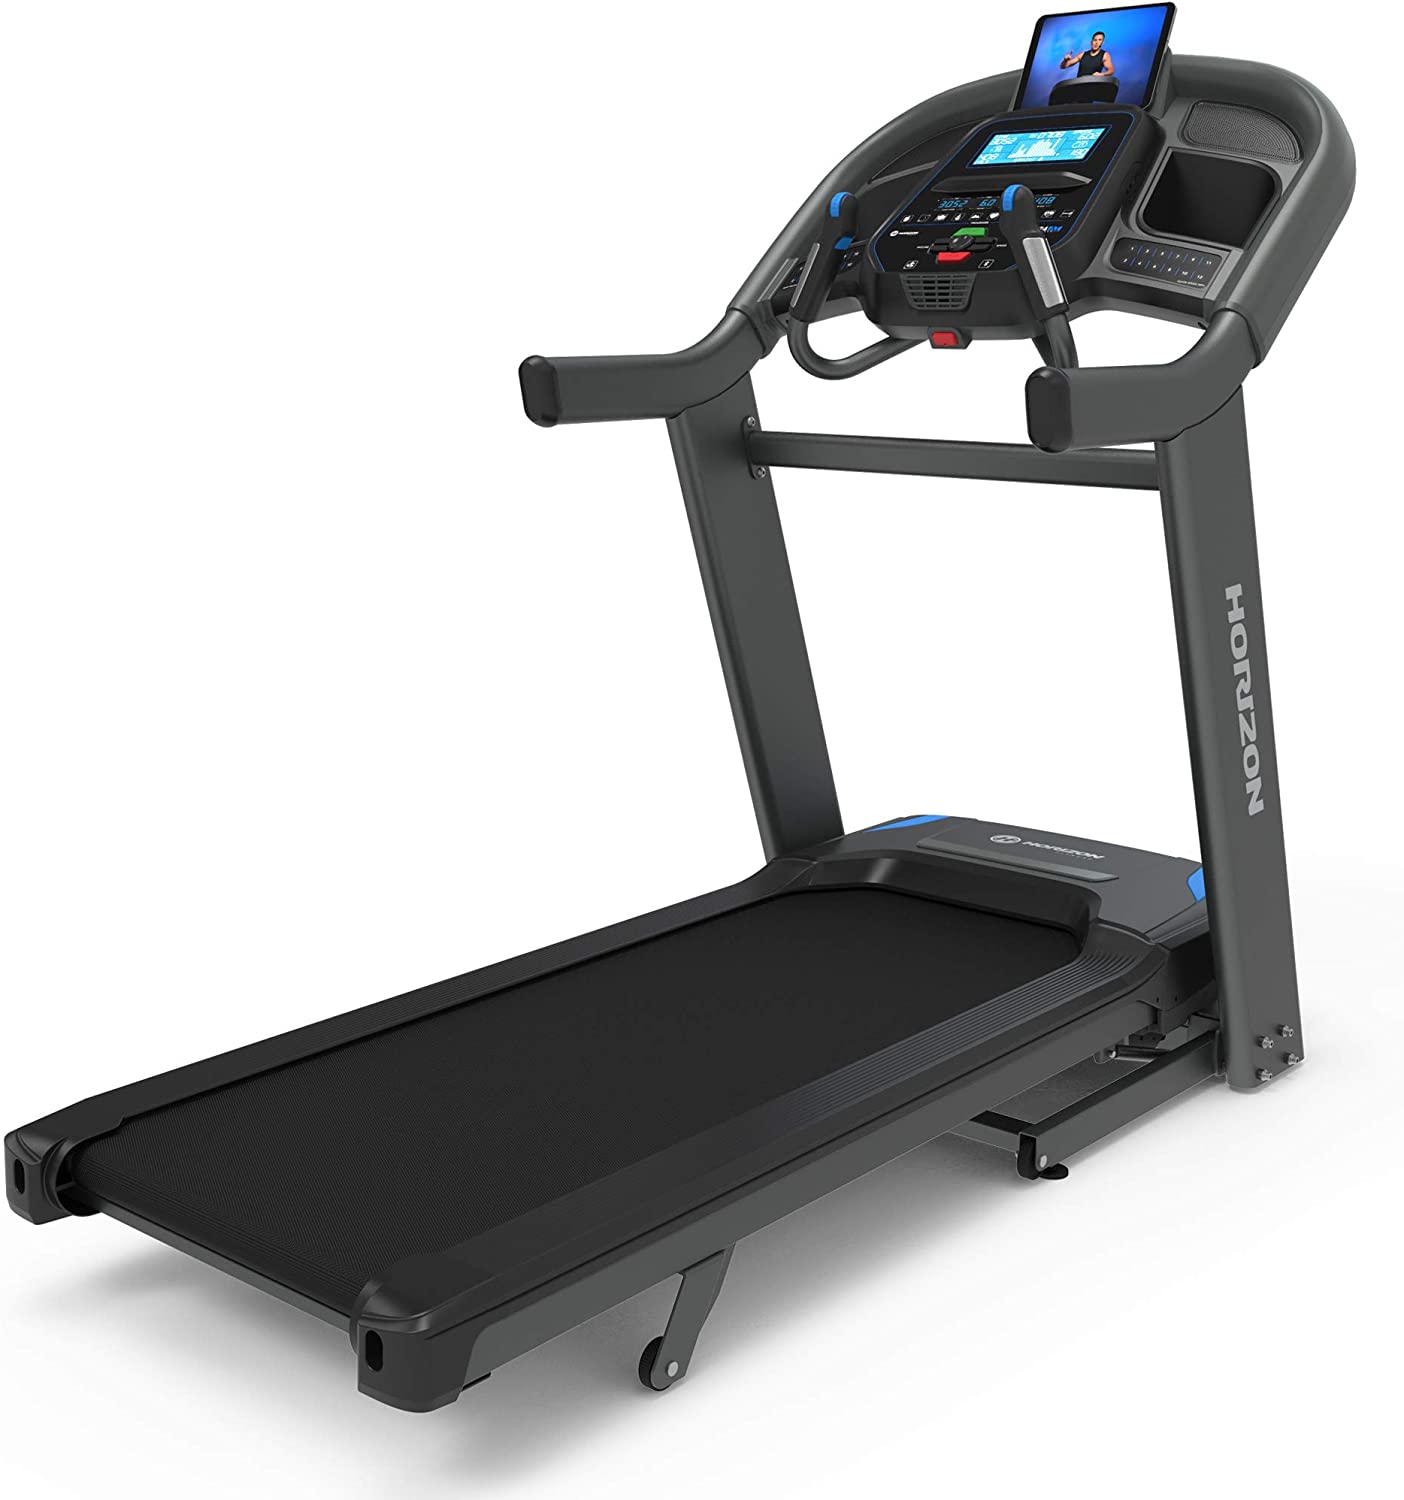 7.4AT Treadmill by Horizon. Powerful Motor, Folding Treadmill. – vabreka